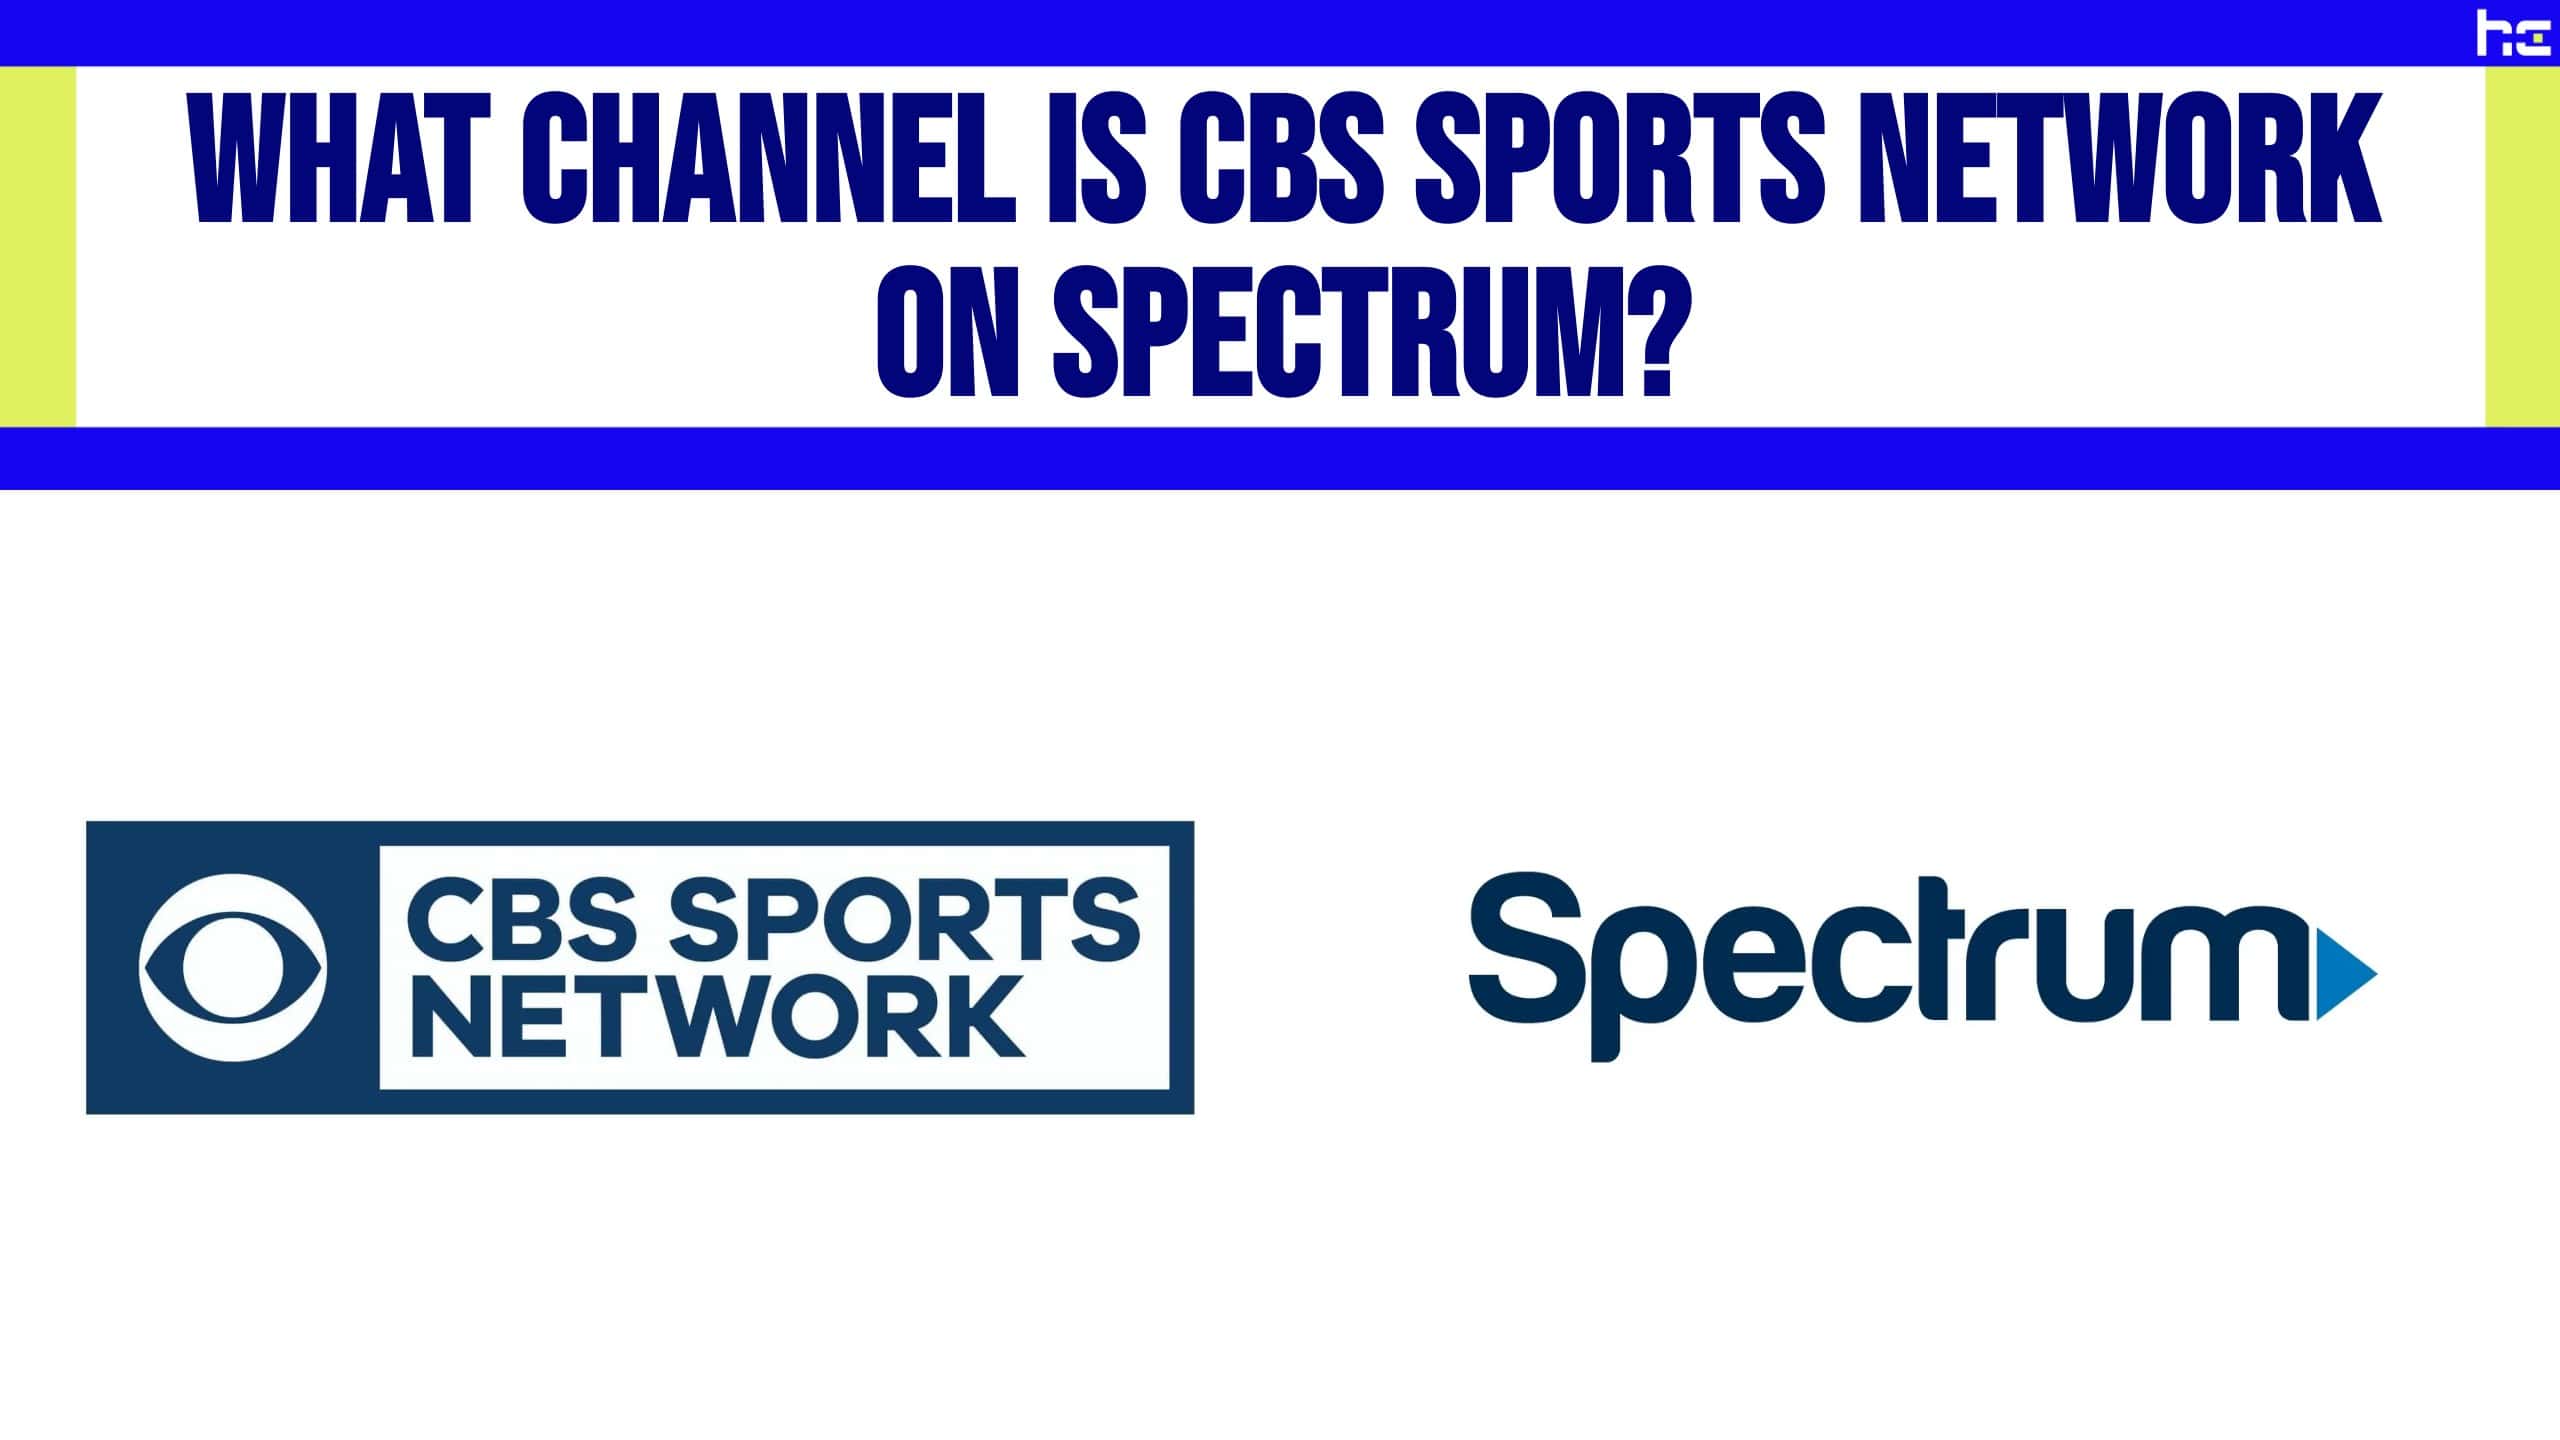 cbs sports network on spectrum